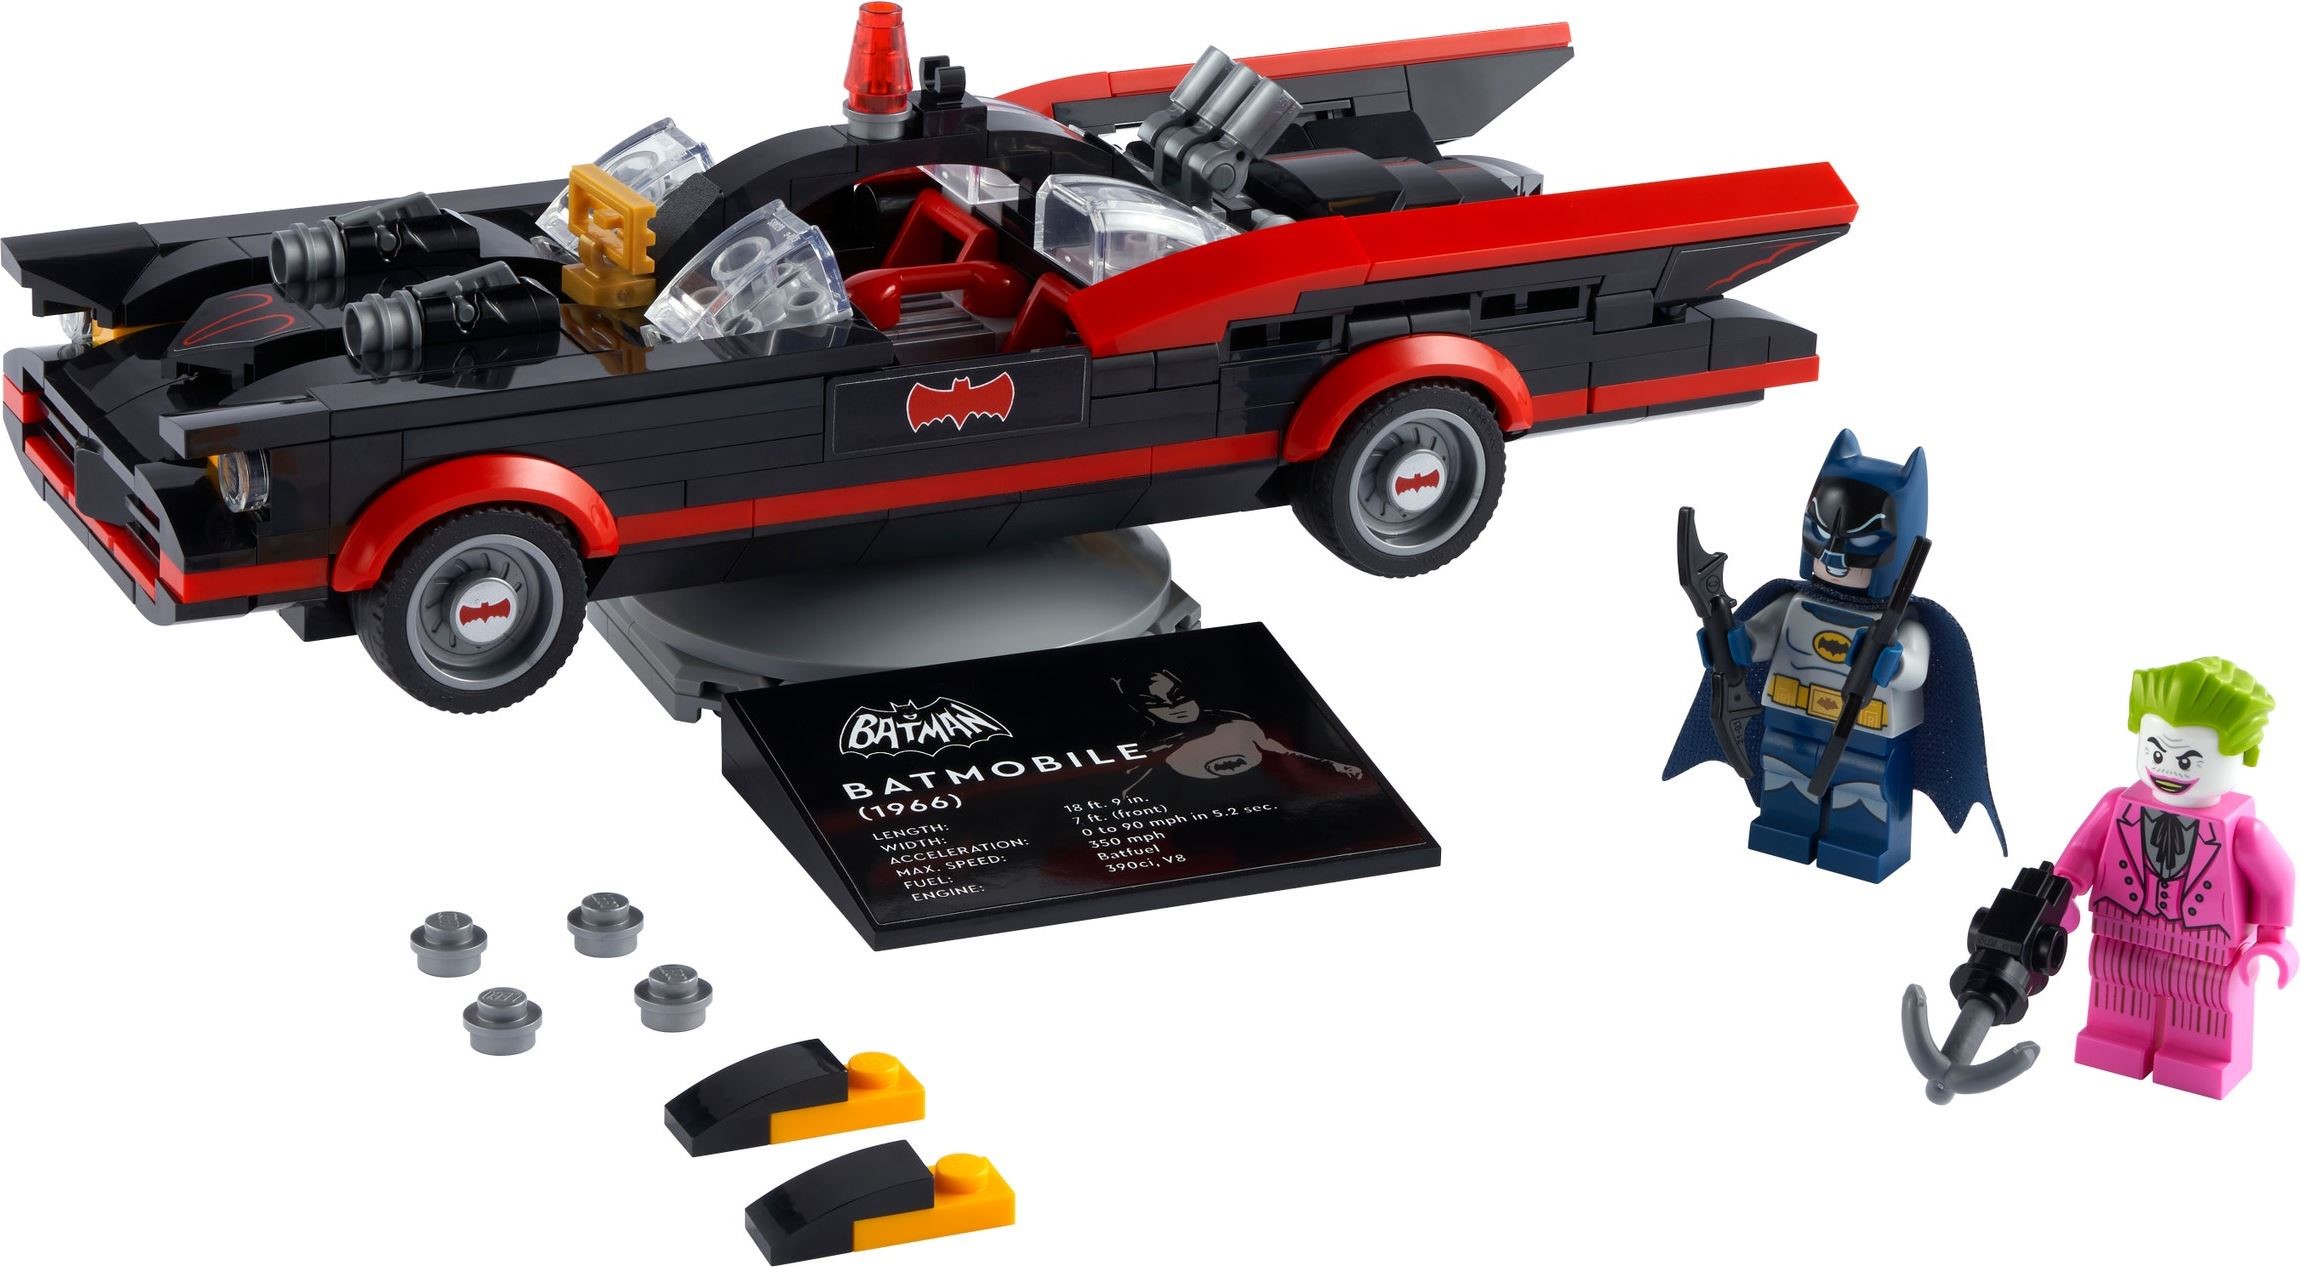 LEGO The Batman Sets Revealed - The Brick Fan